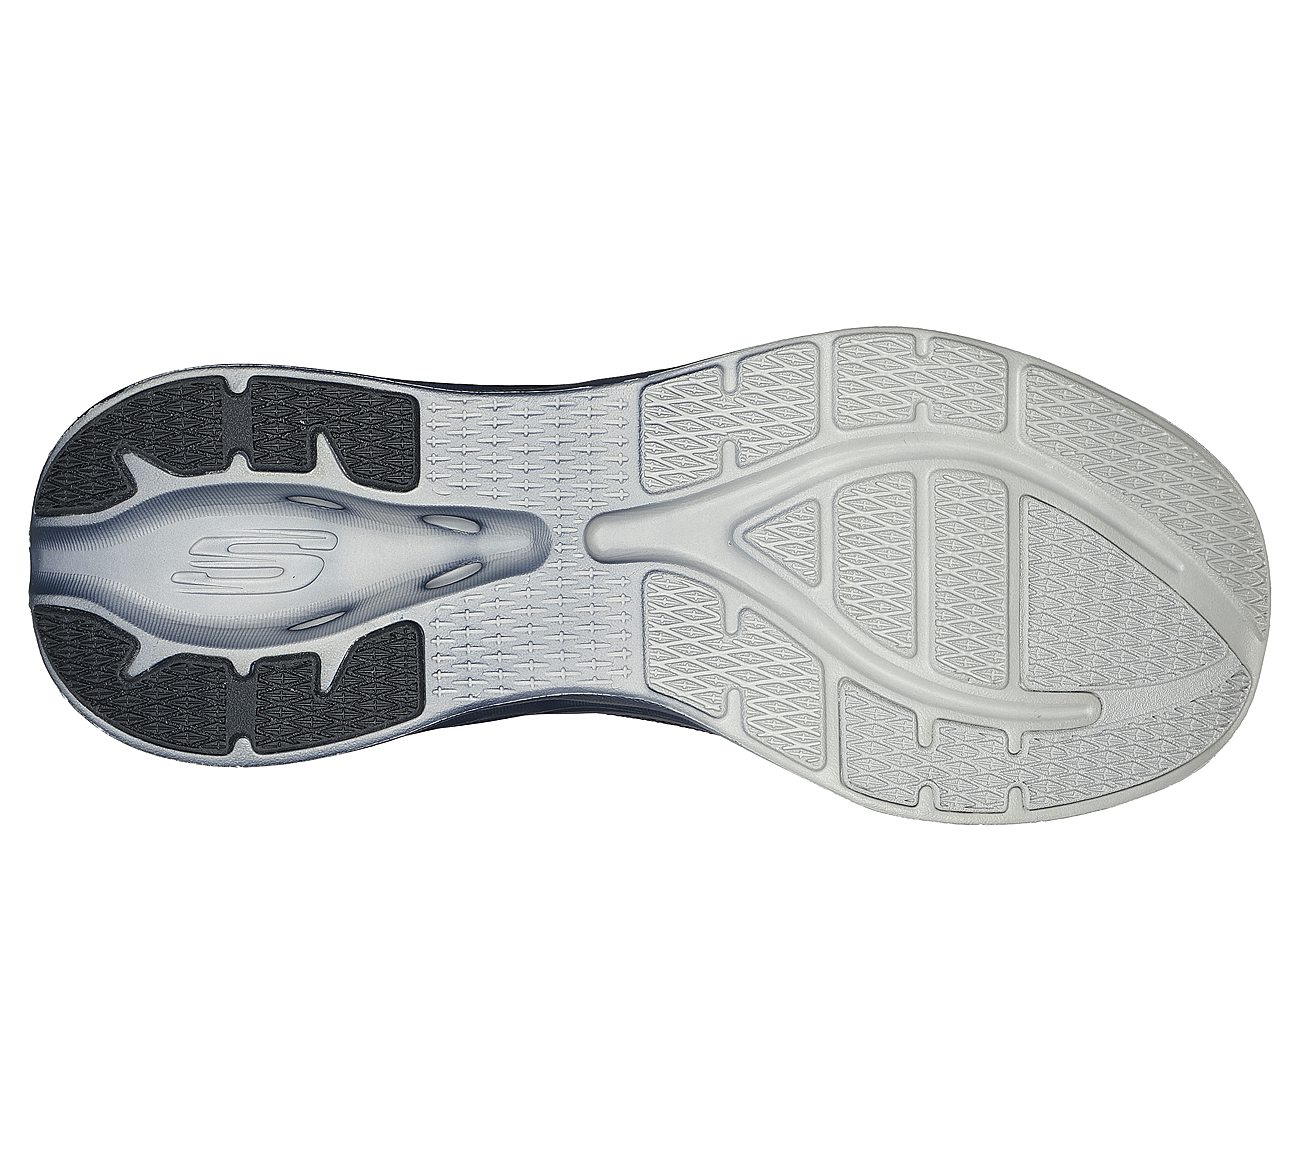 GLIDE-STEP SWIFT, NNNAVY Footwear Bottom View